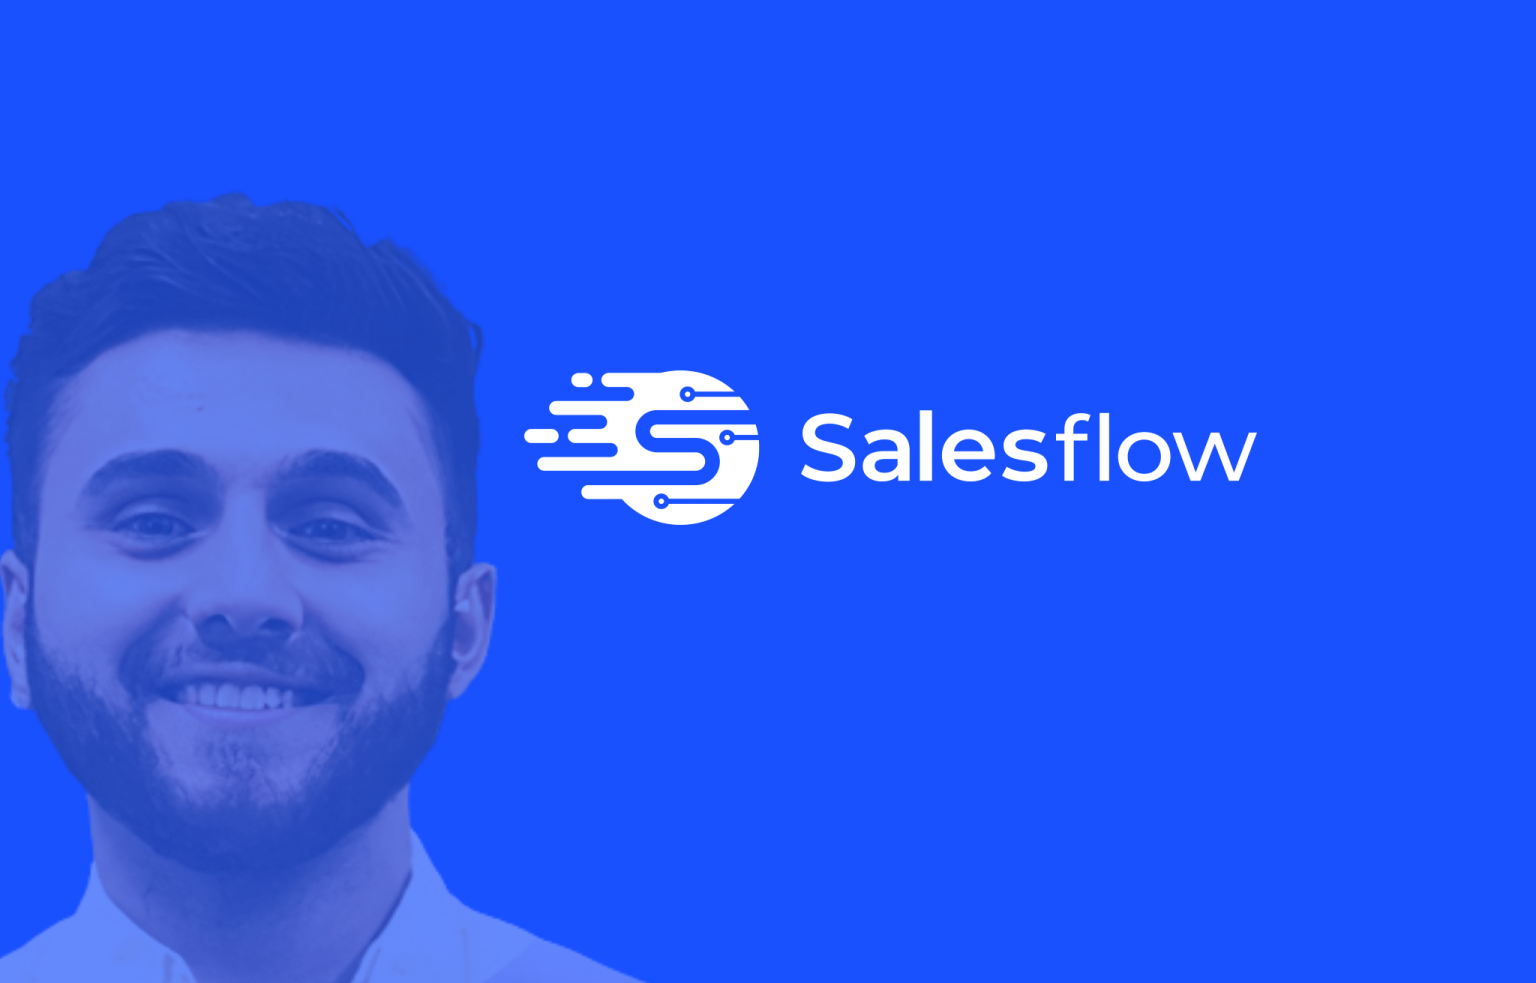 Salesflow Enhance your skills with informative webinar